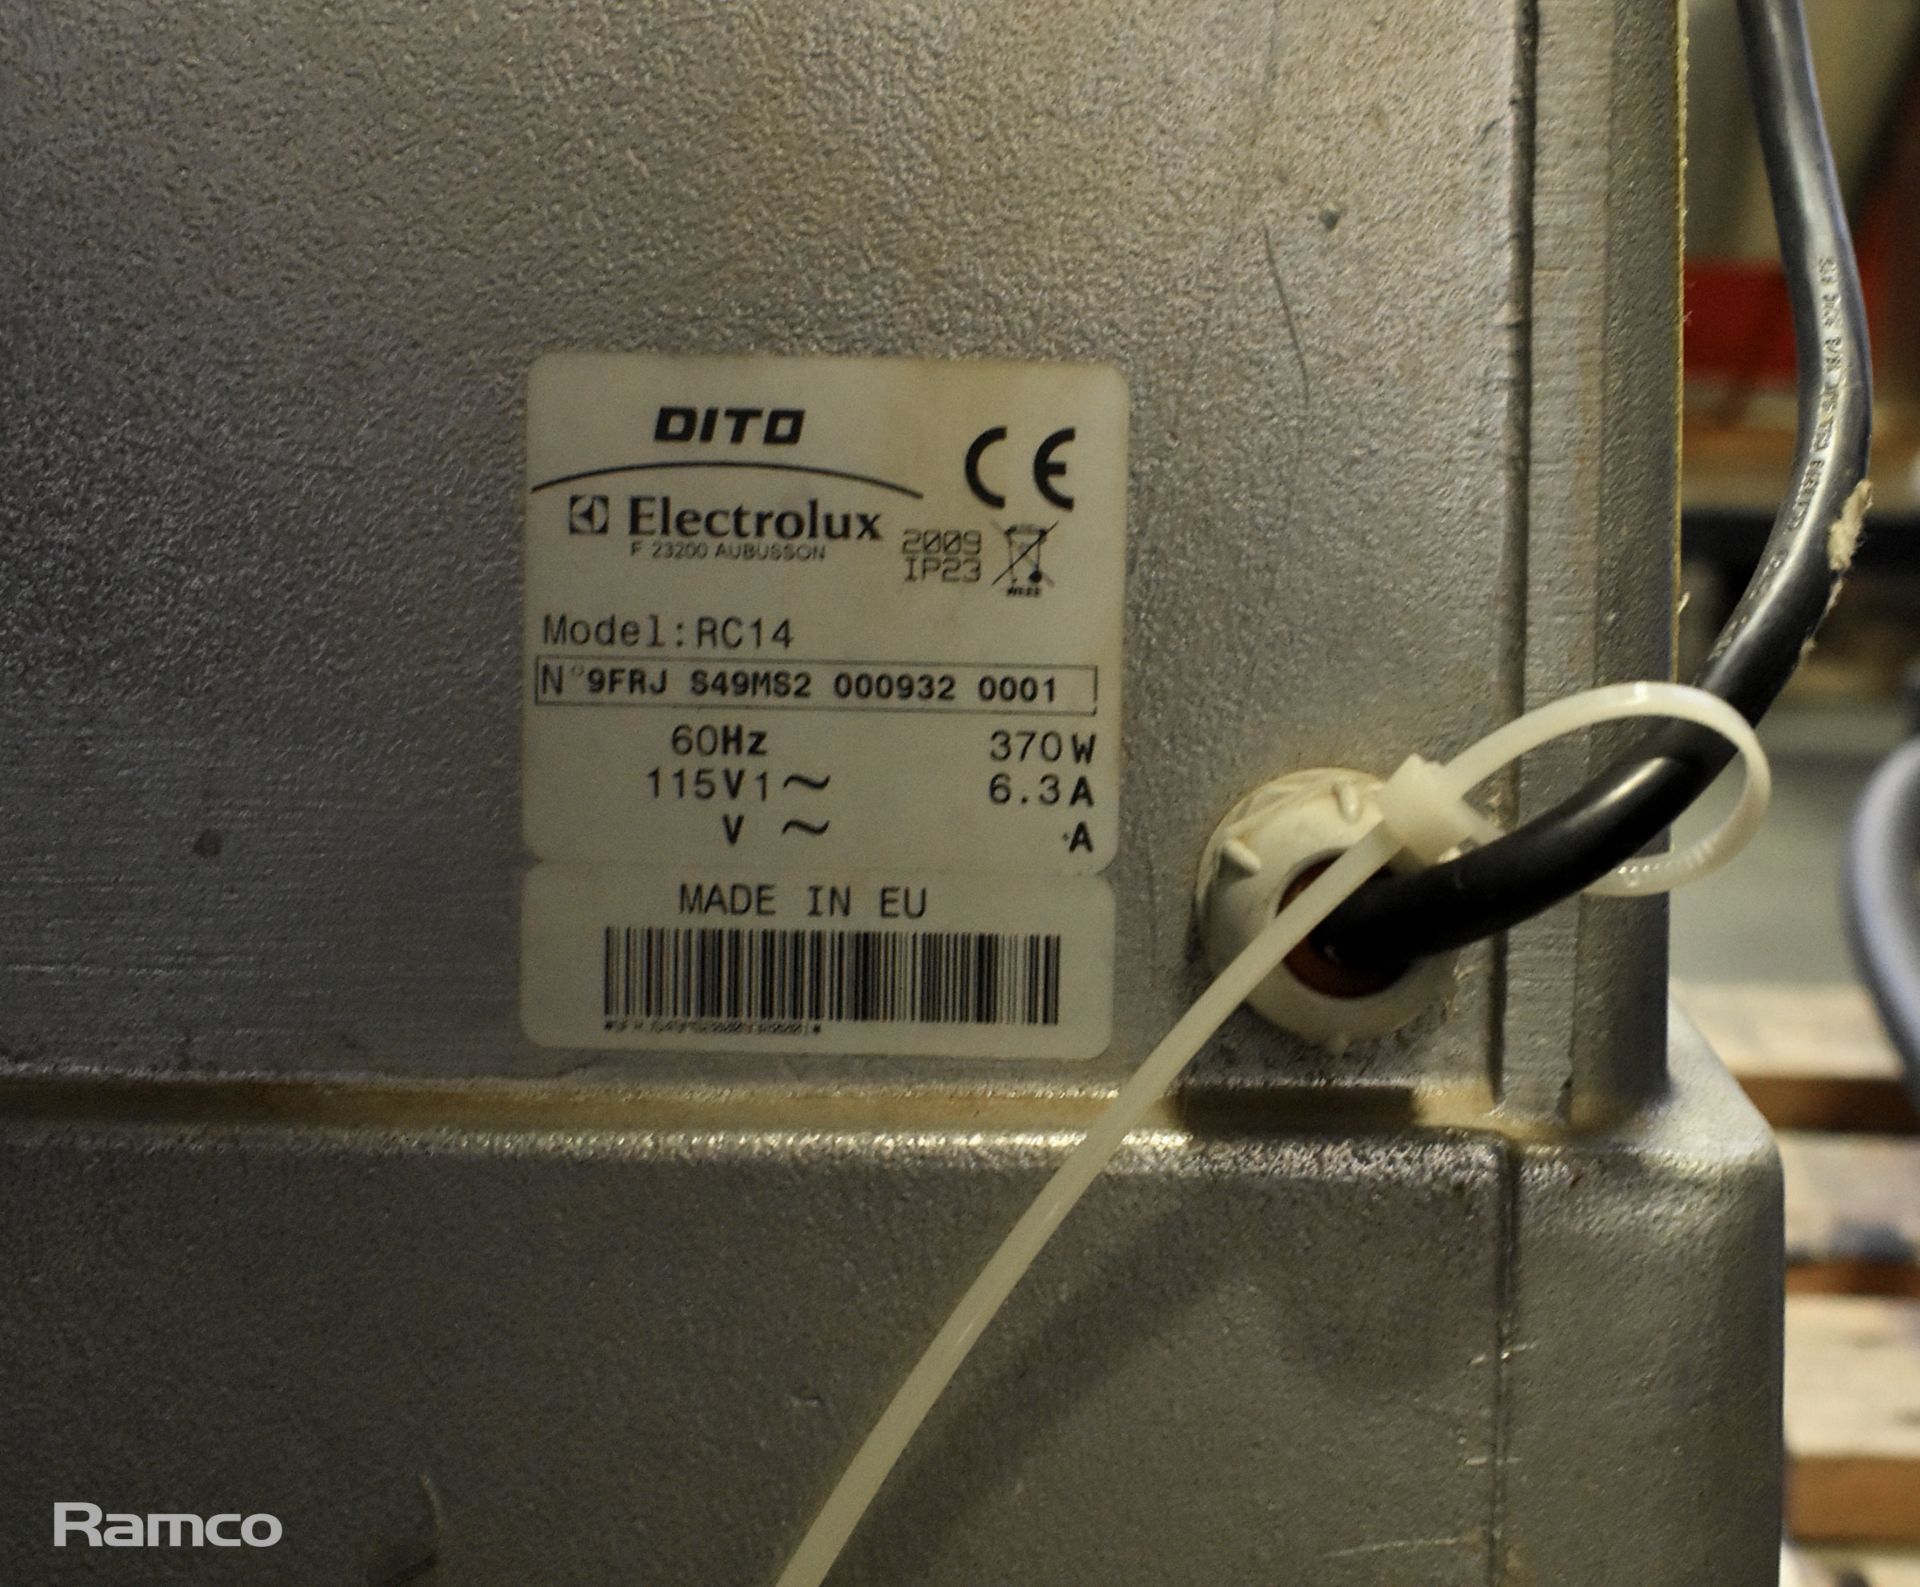 Electrolux RC14 potato chipper - 110V - 60Hz - W 650 x D 400 x H 600mm - Image 6 of 6